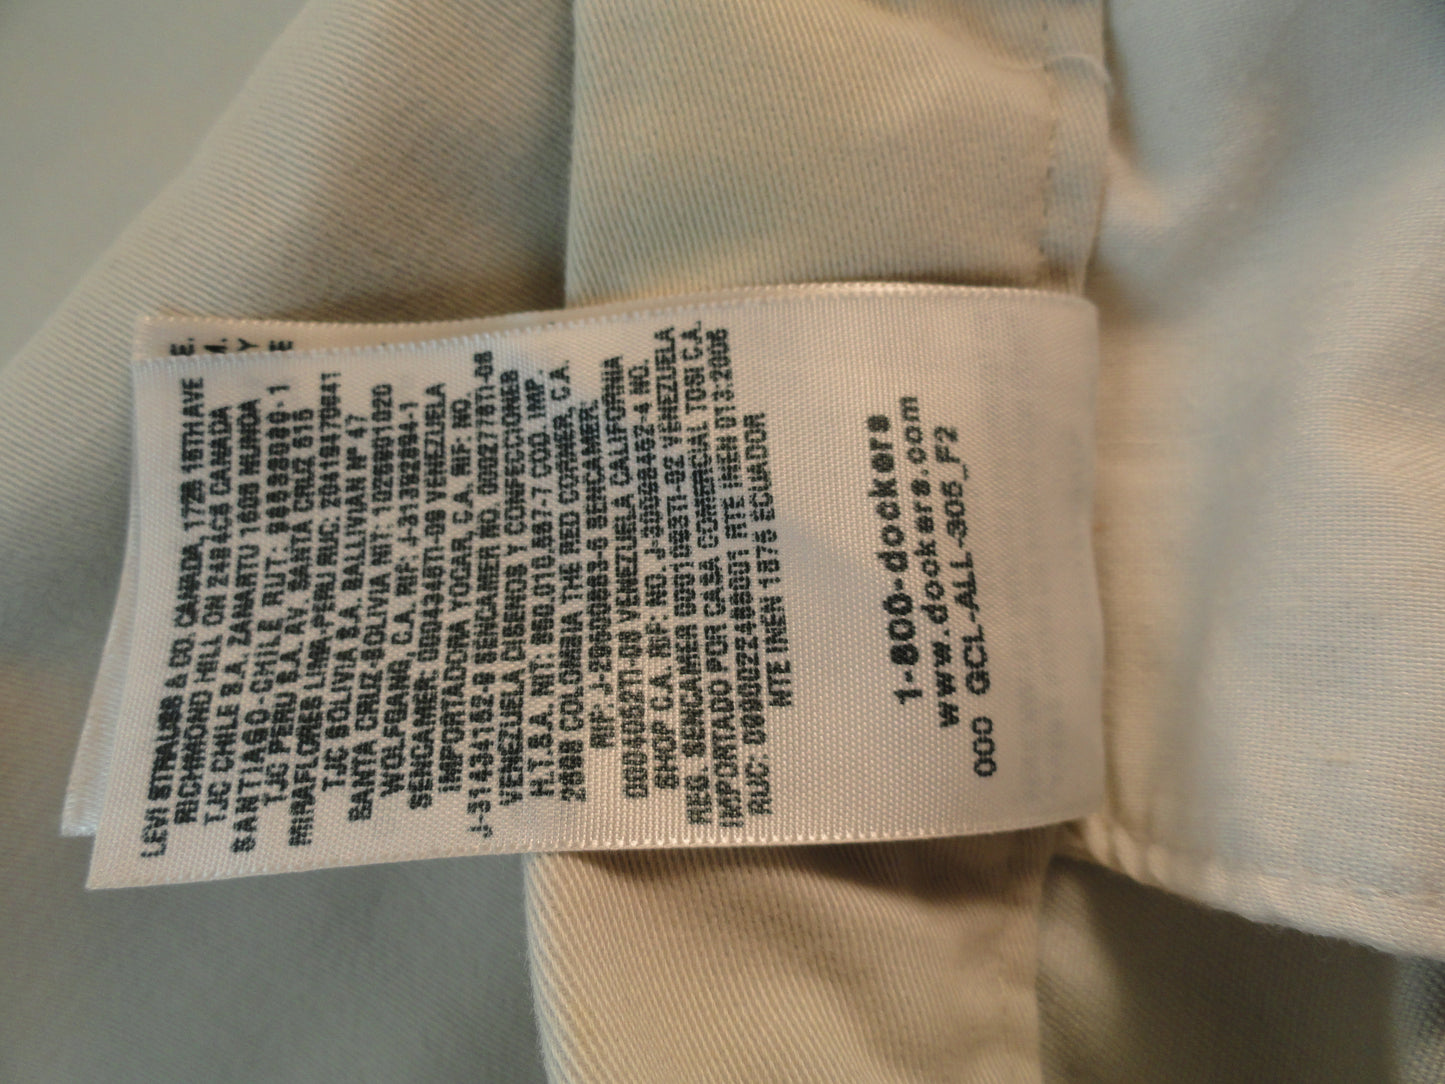 Dockers Men's Khaki Pants SKU 000161 – Designers On A Dime